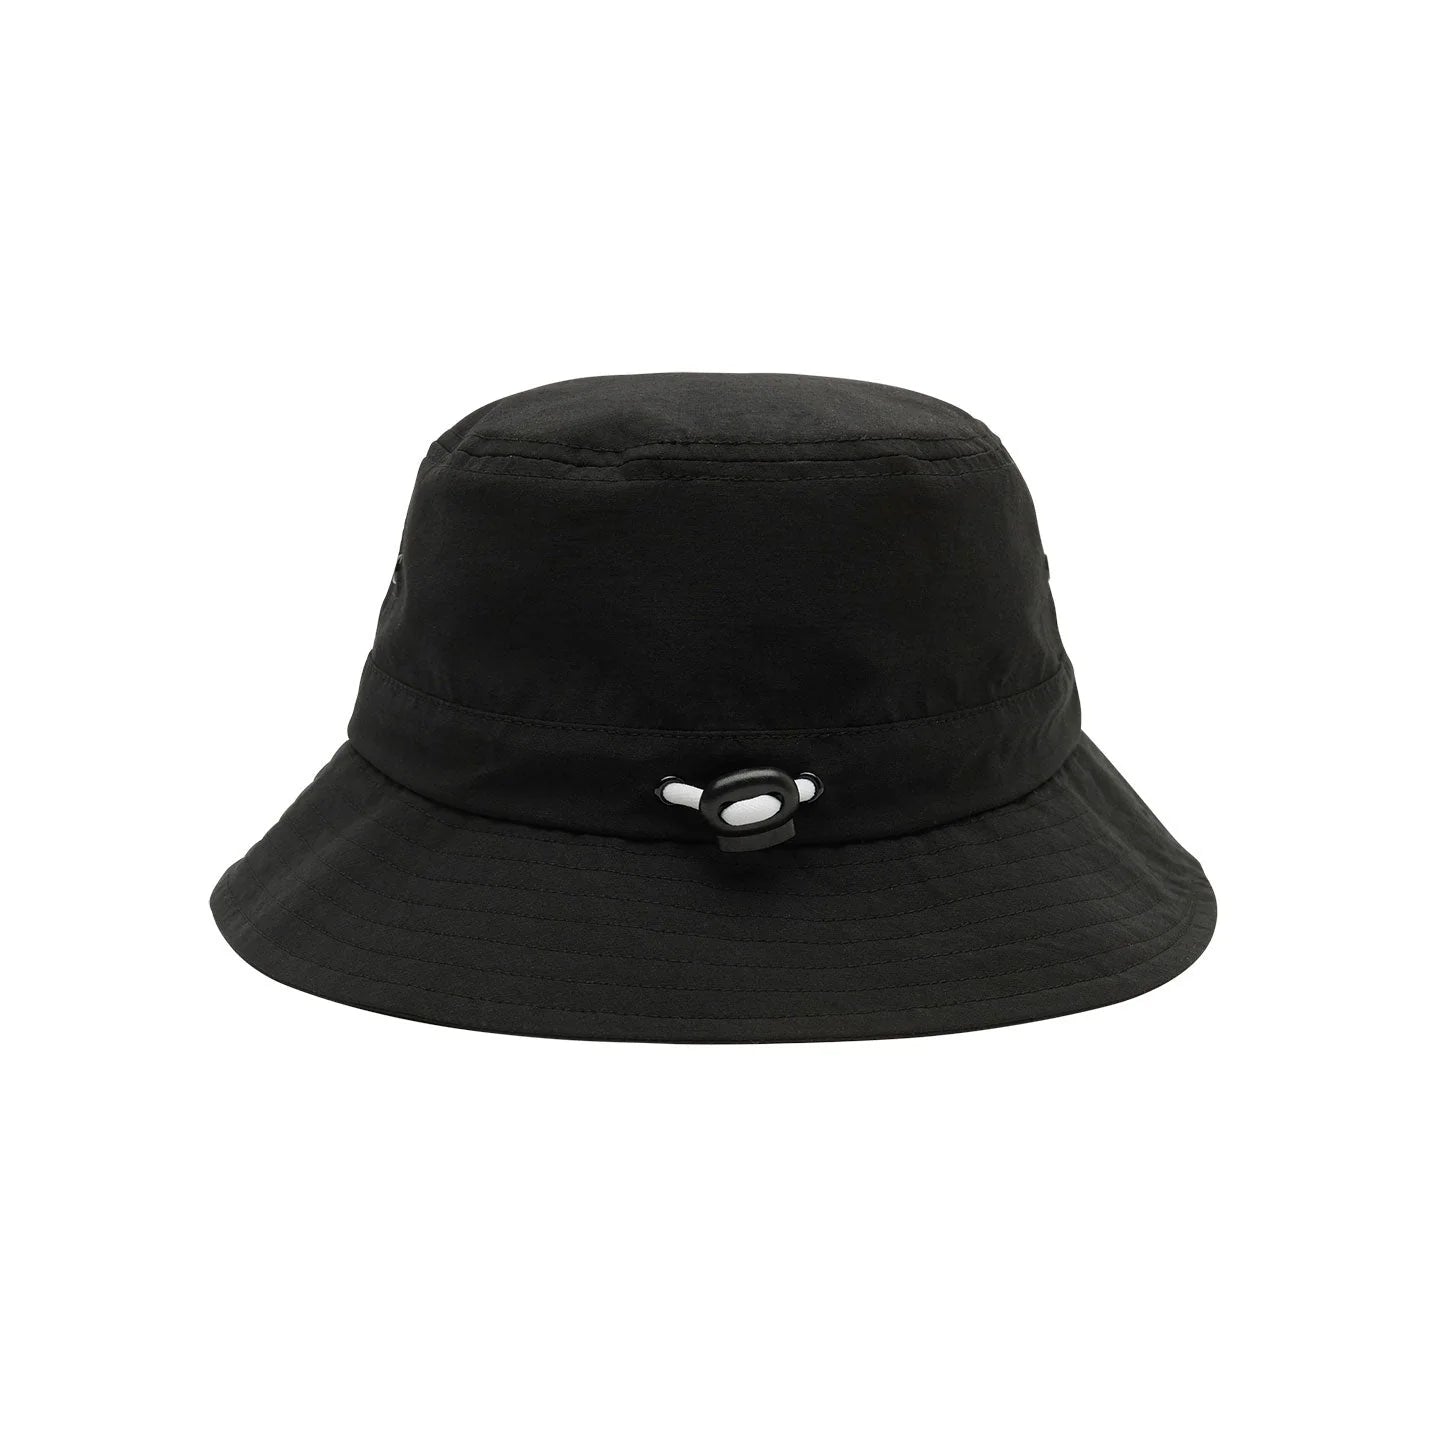 OBEY BOLD CENTURY BUCKET HAT - black